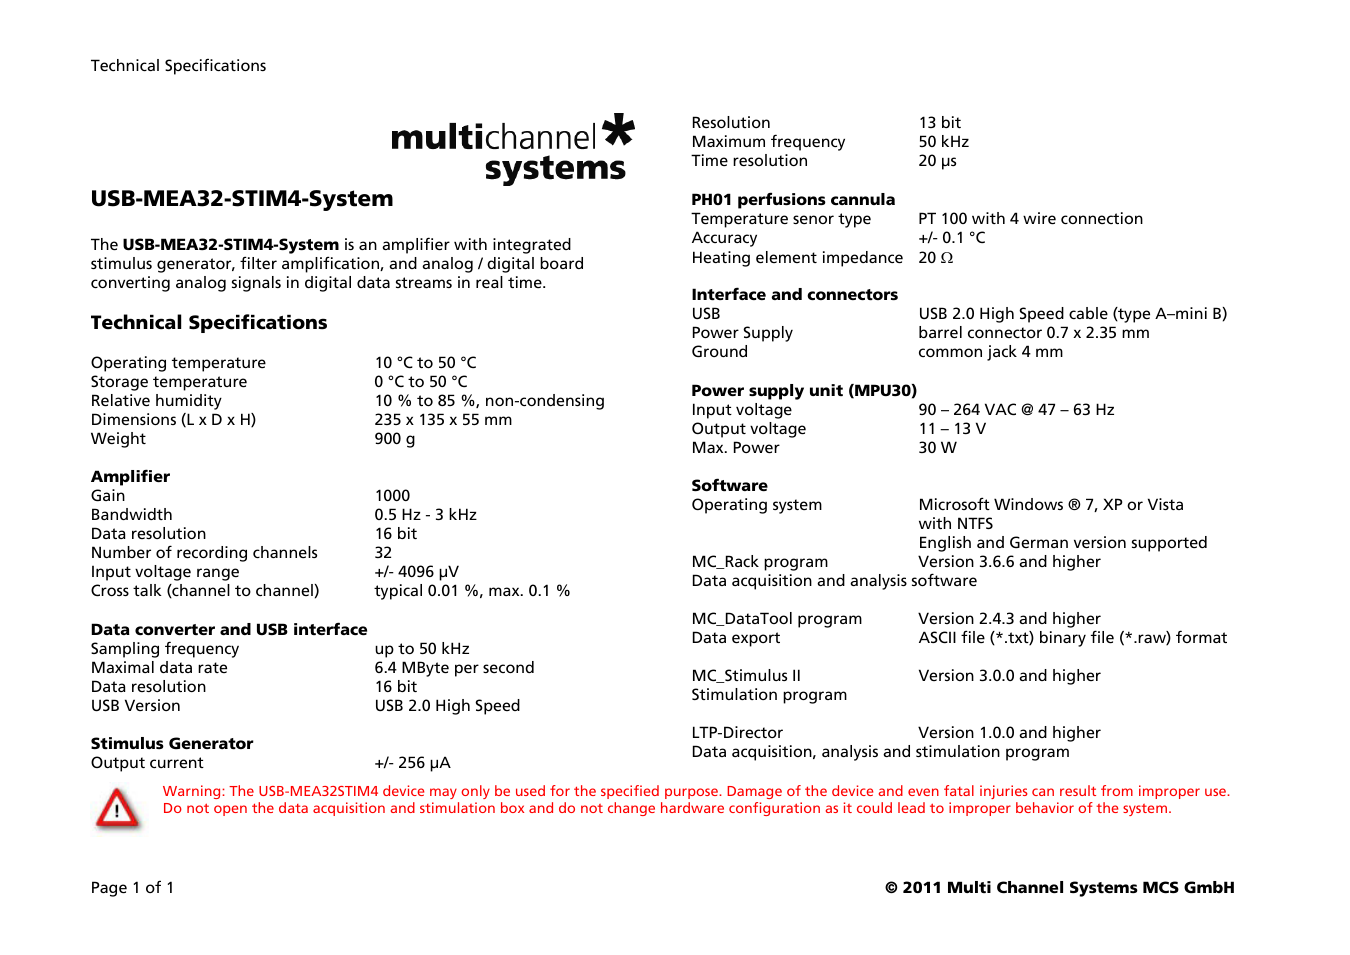 USB-MEA32-STIM4-System